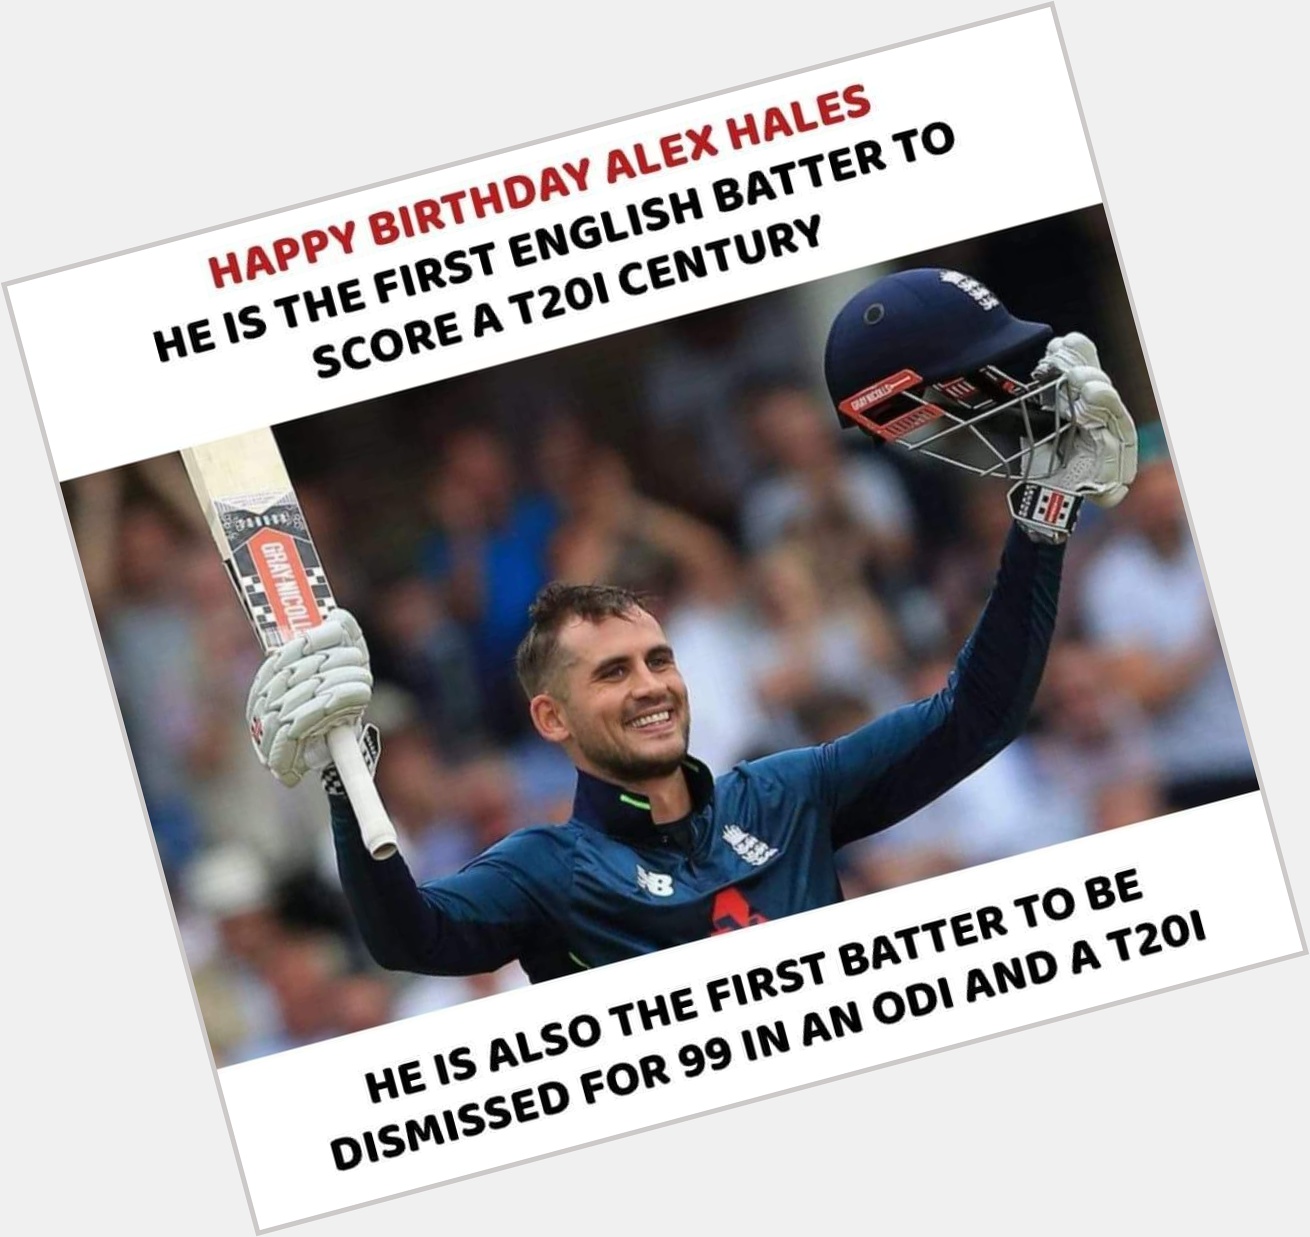 Happy Birthday Alex Hales!  